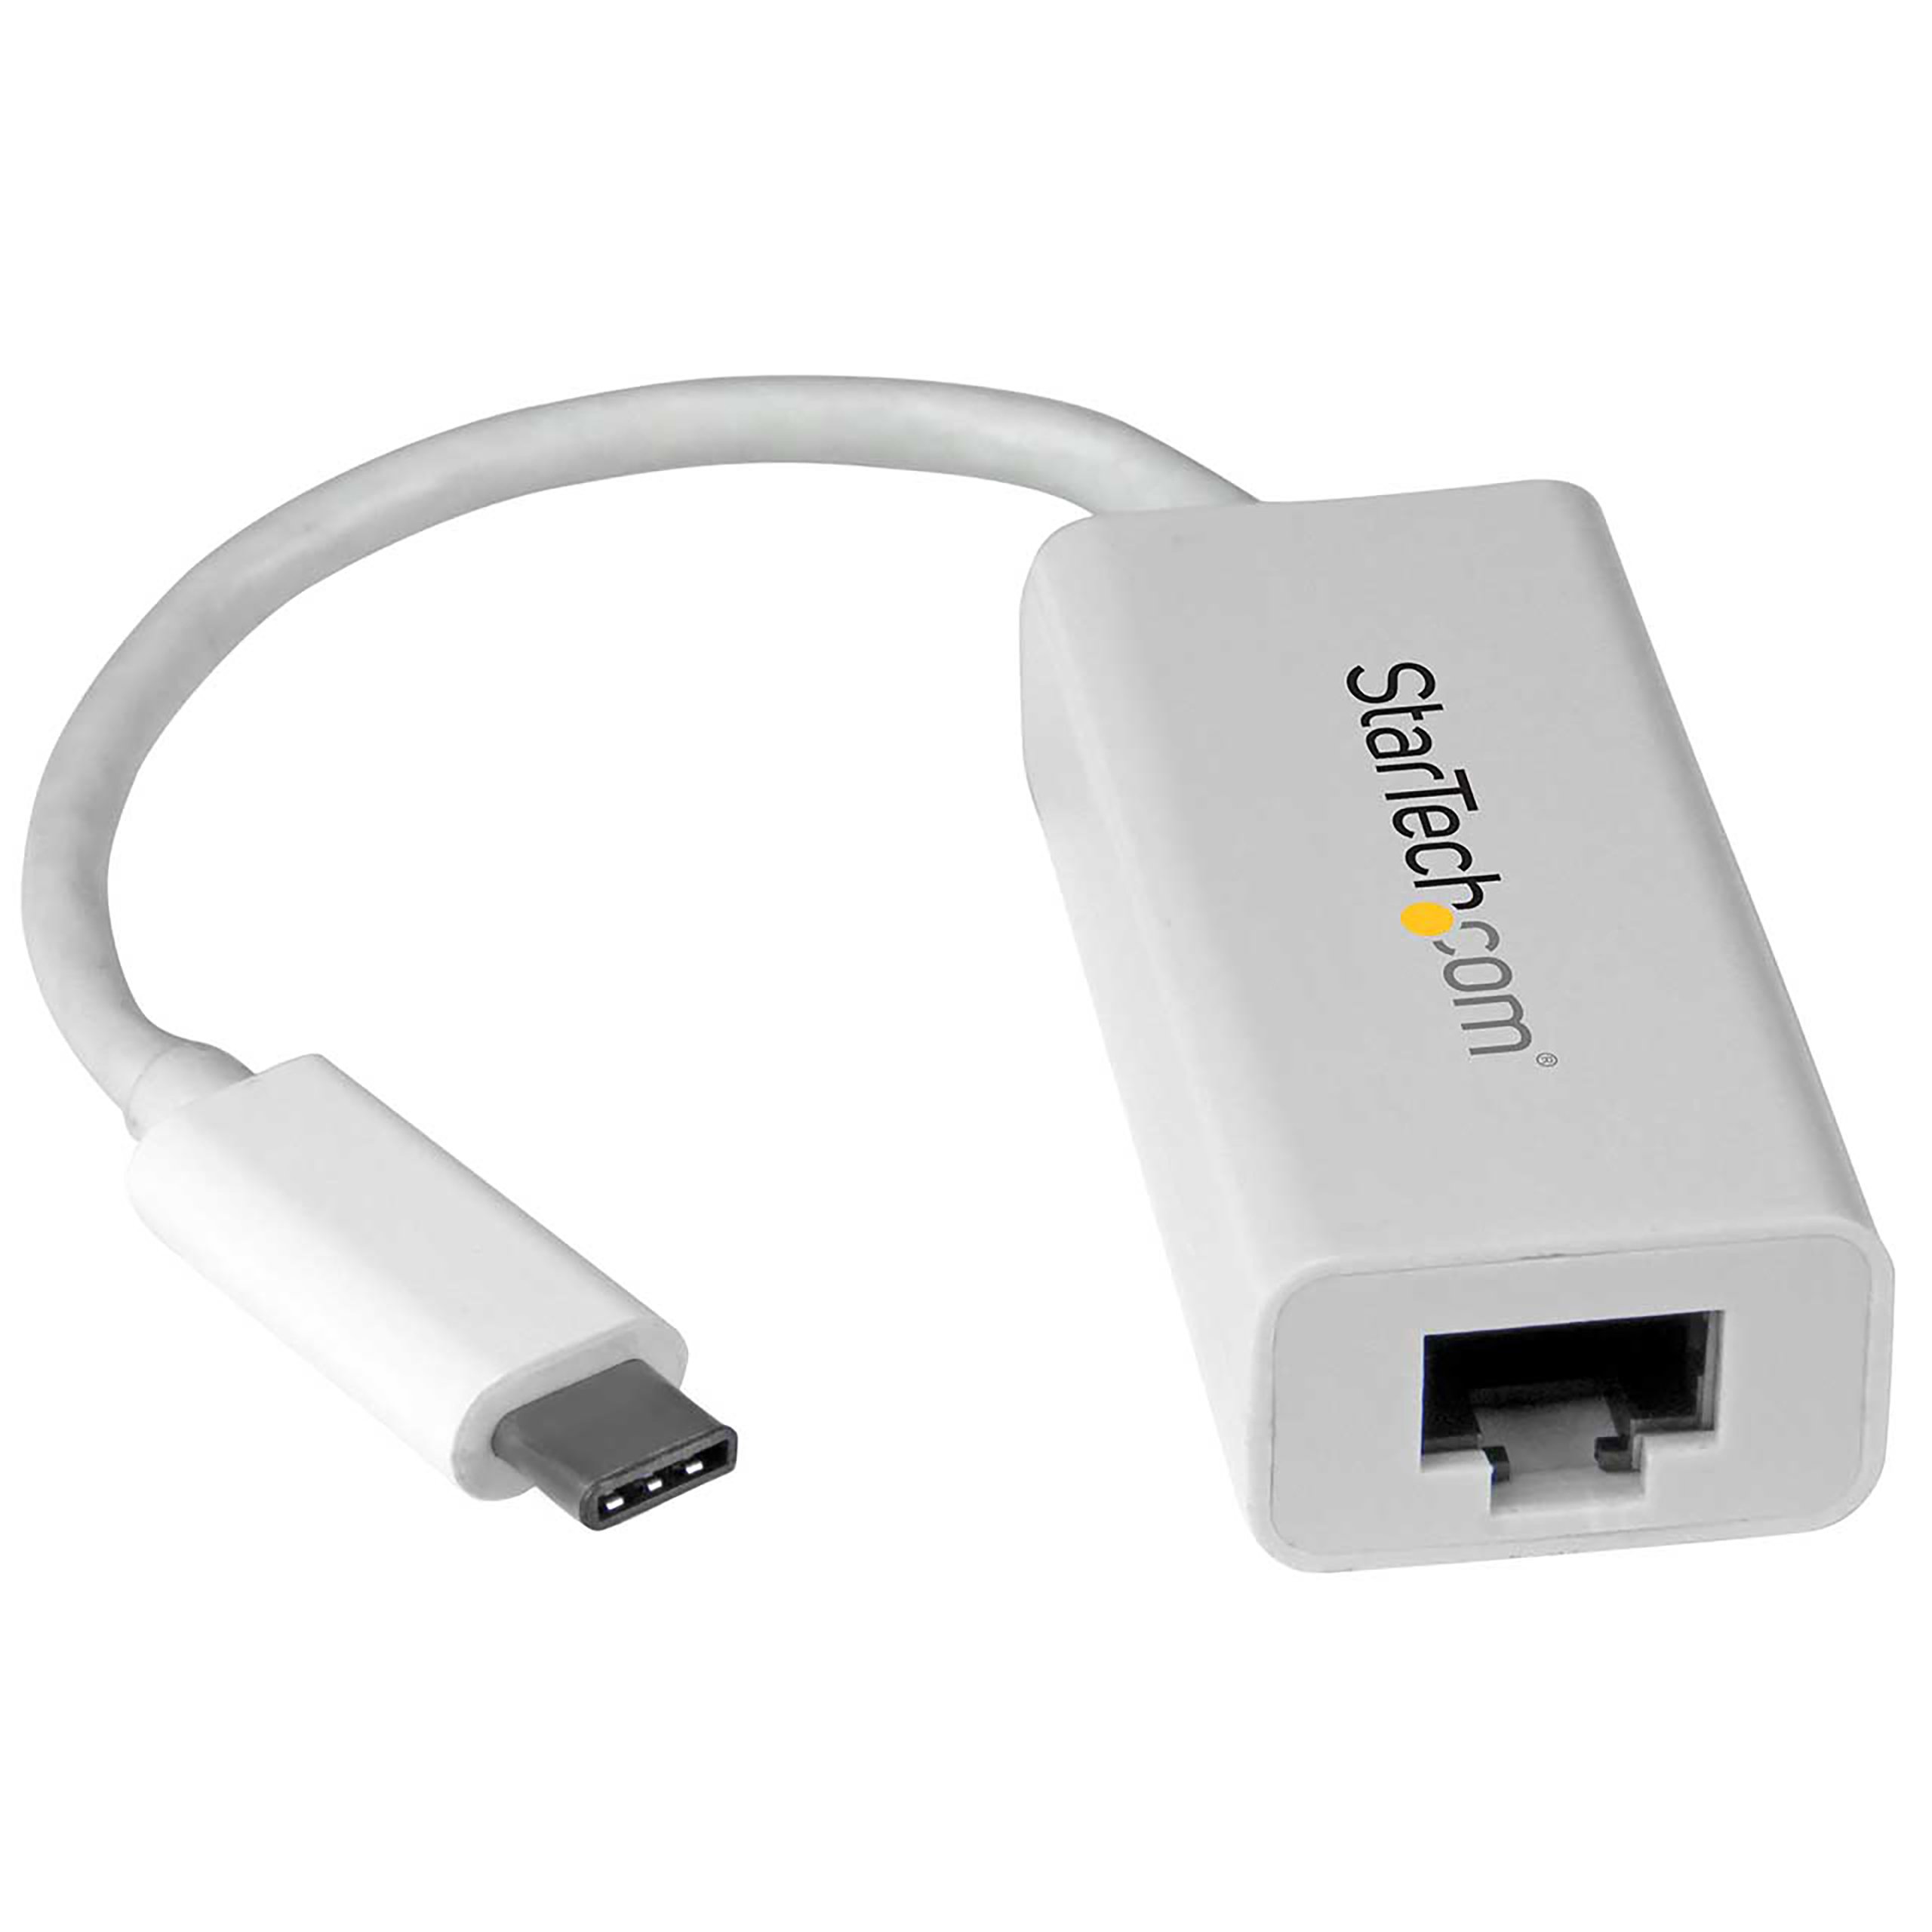 StarTech.com USB-C auf Gigabit Ethernet Adapter - Weiß - Thunderbolt 3 kompatibel - Windows & Mac - RJ45 LAN Netzwerkkonverter (US1GC30W)